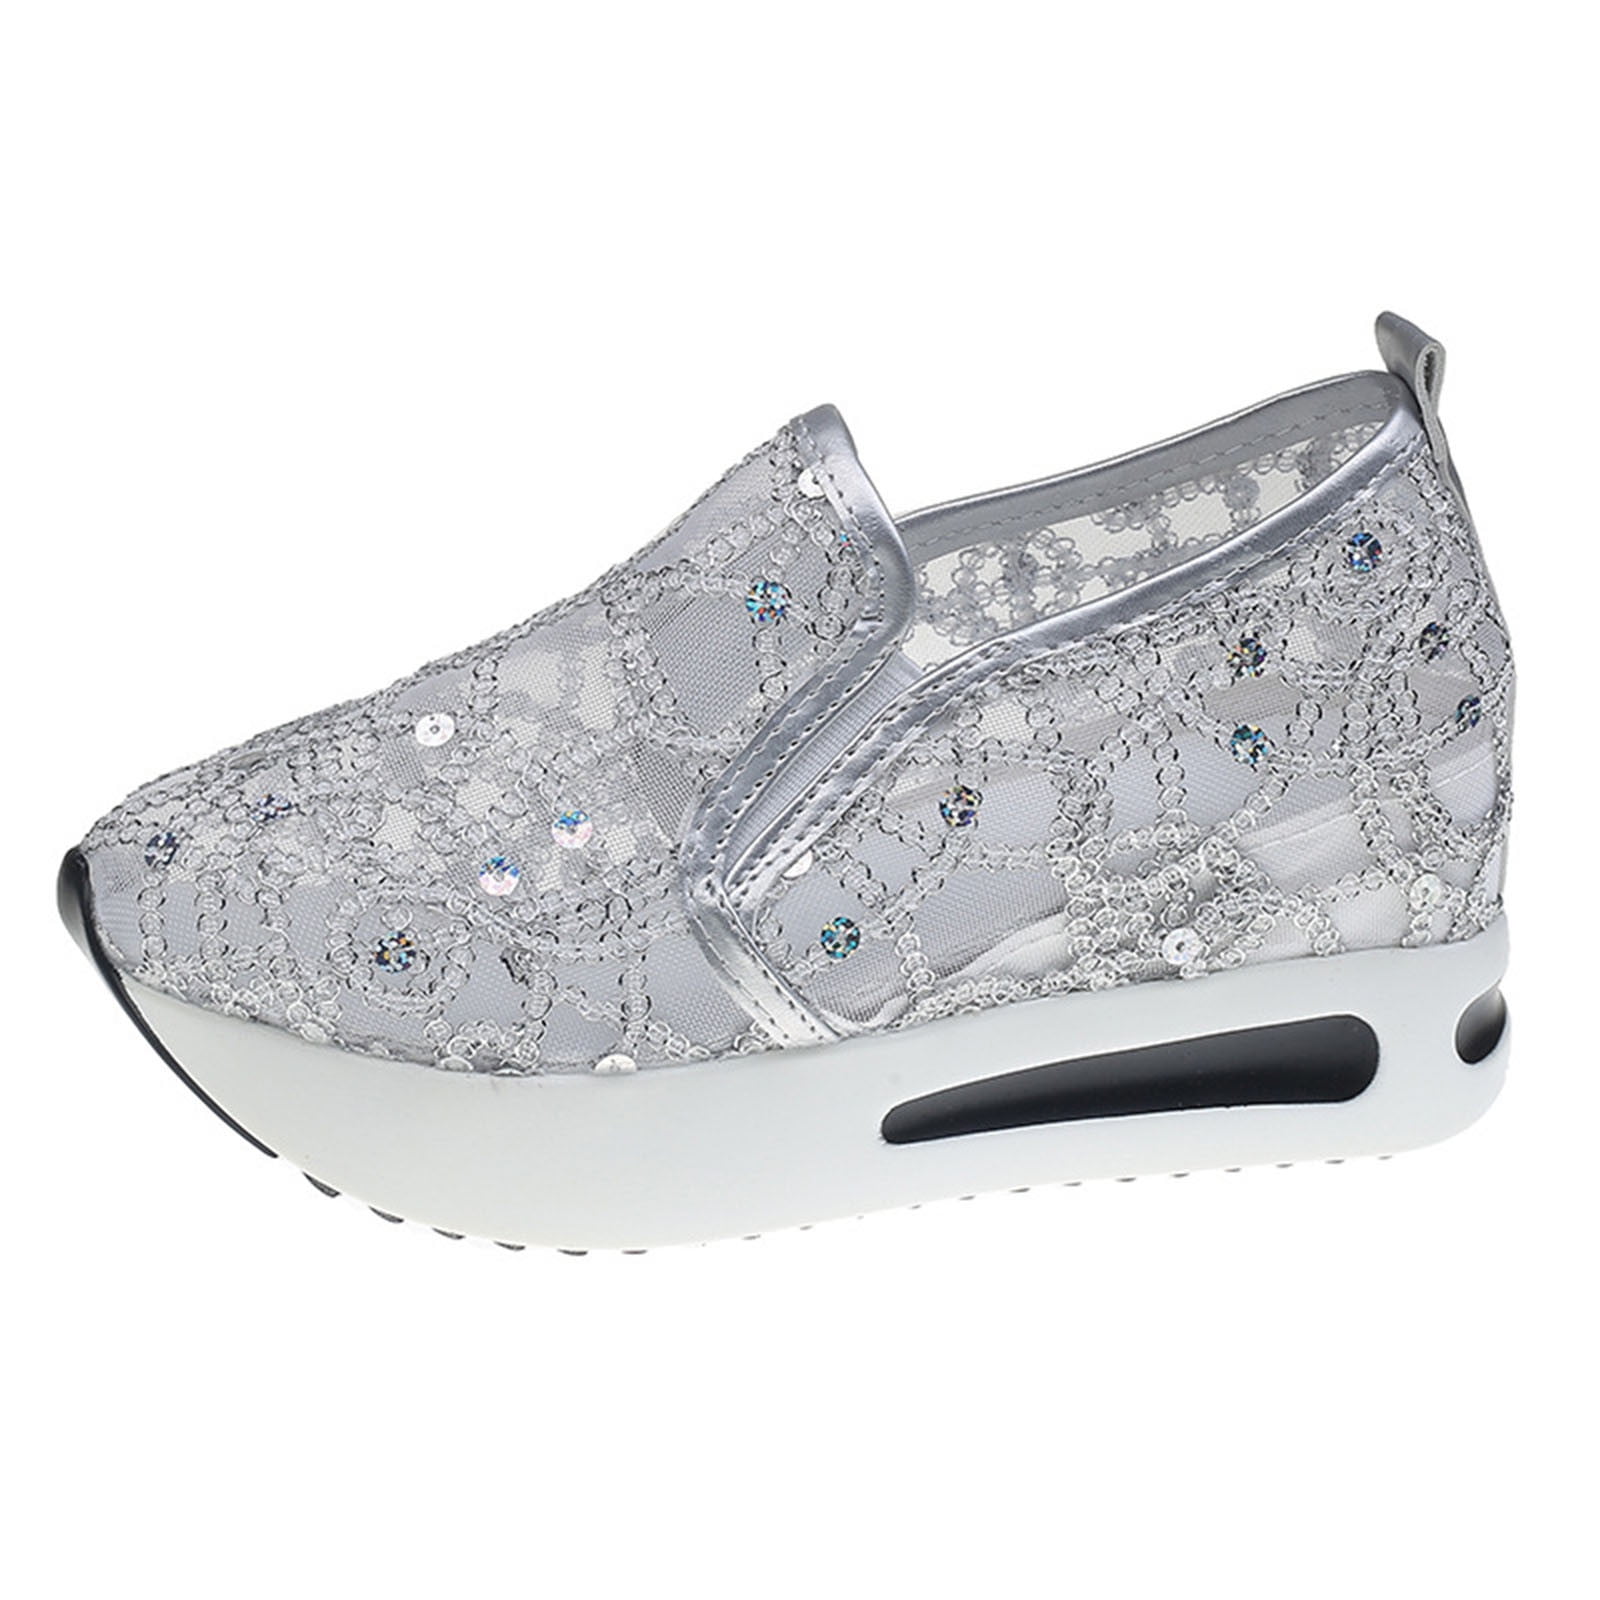  Orthopedic Platform Sneakers for Women Dressy Sparkly